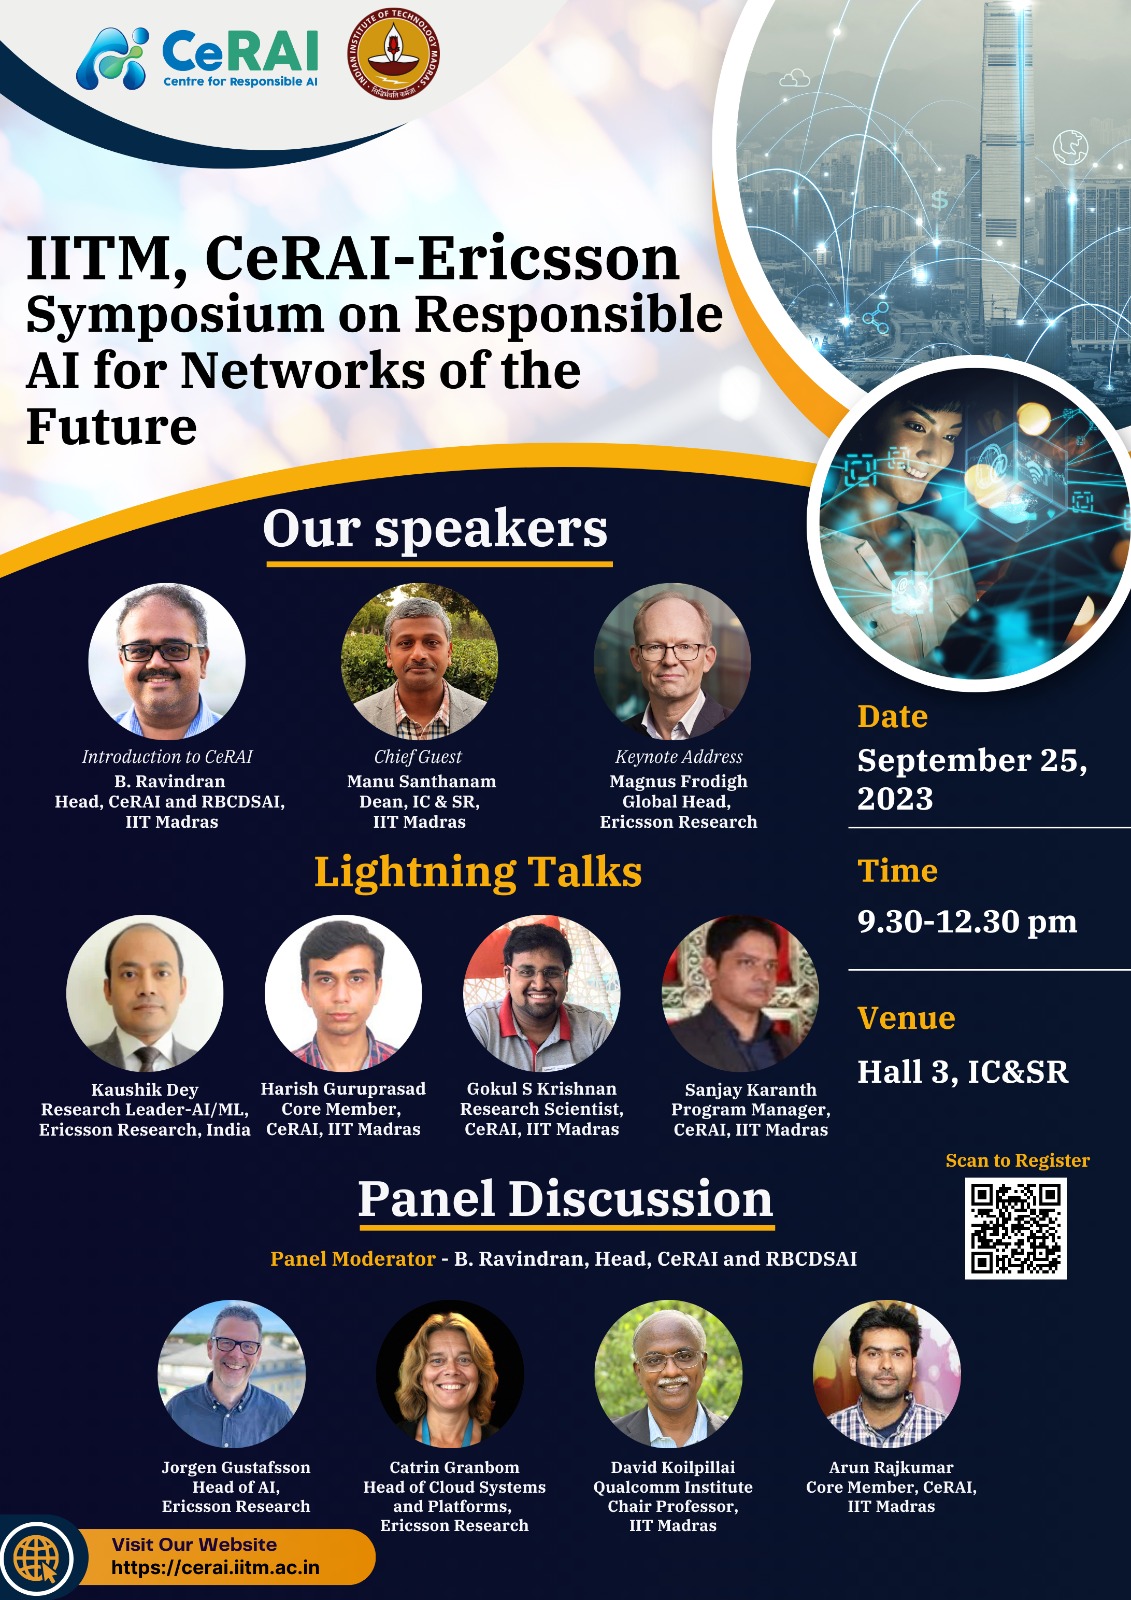 IITM-CeRAI-Ericsson Symposium on AI for Networks of the Future